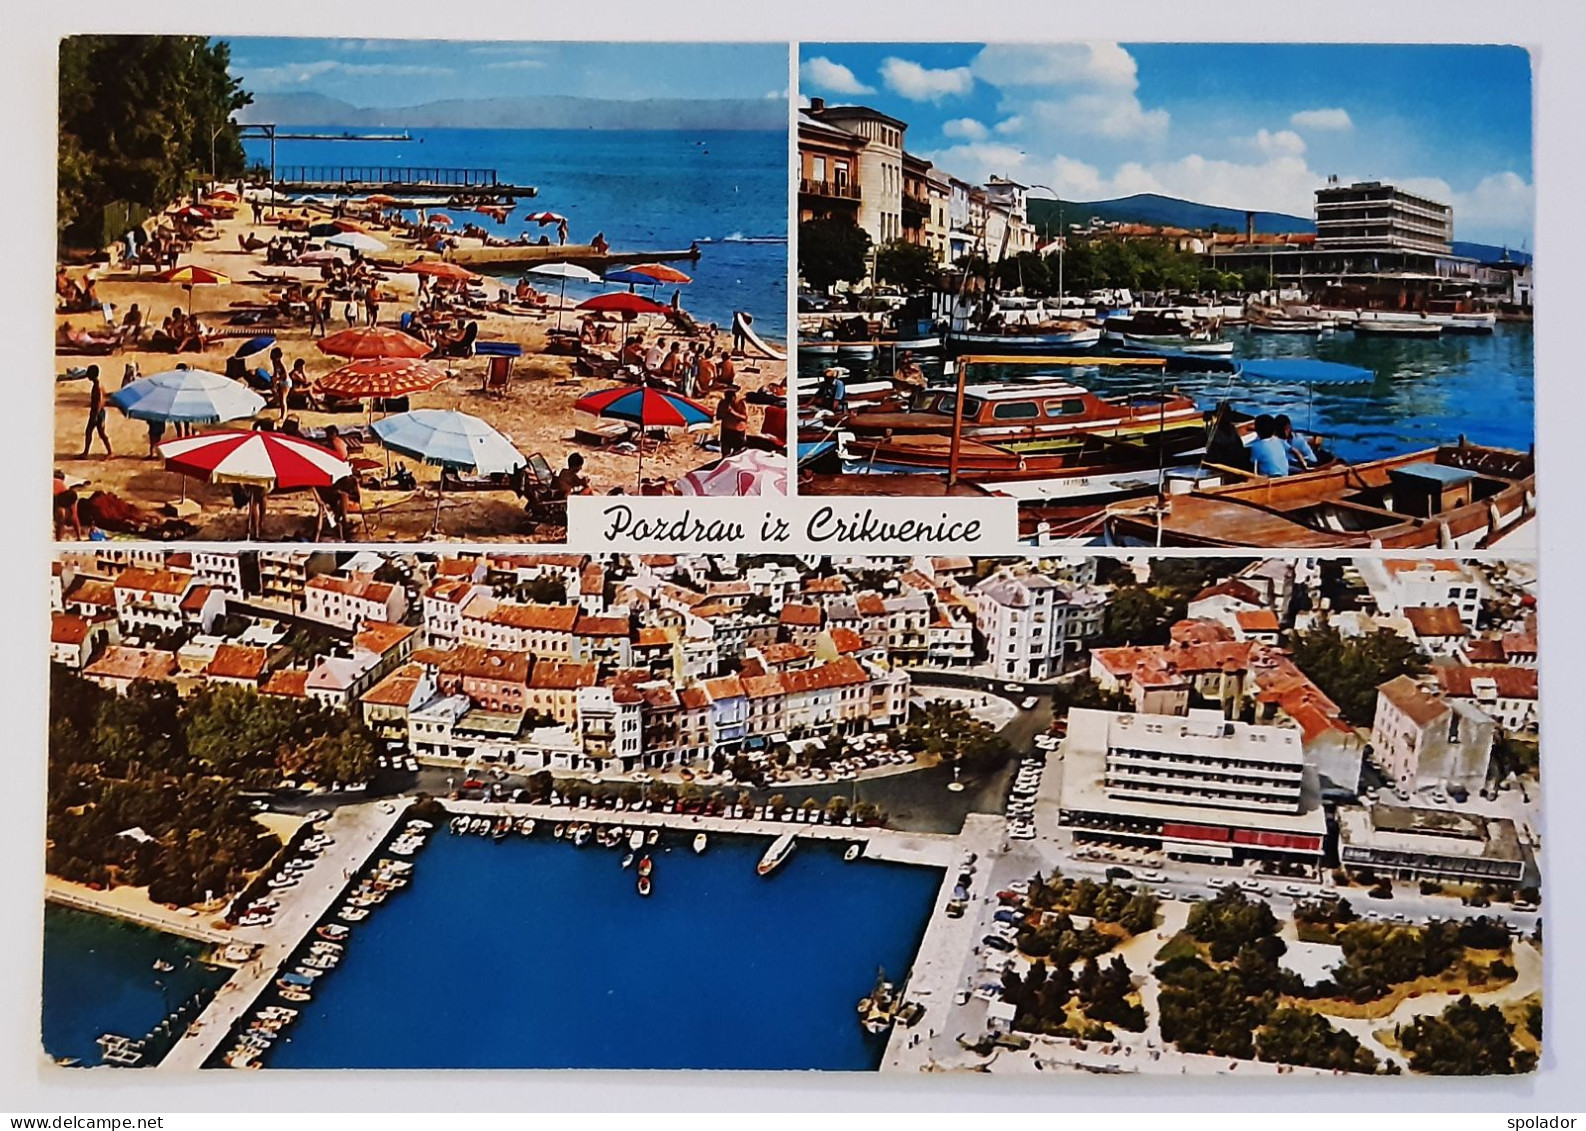 Ex-Yugoslavia-Vintage Photo Postcard-Hrvatska-Crikvenica-Town In Croatia-Pozdrav Iz Crikvenice-1979-used With Stamp - Yougoslavie